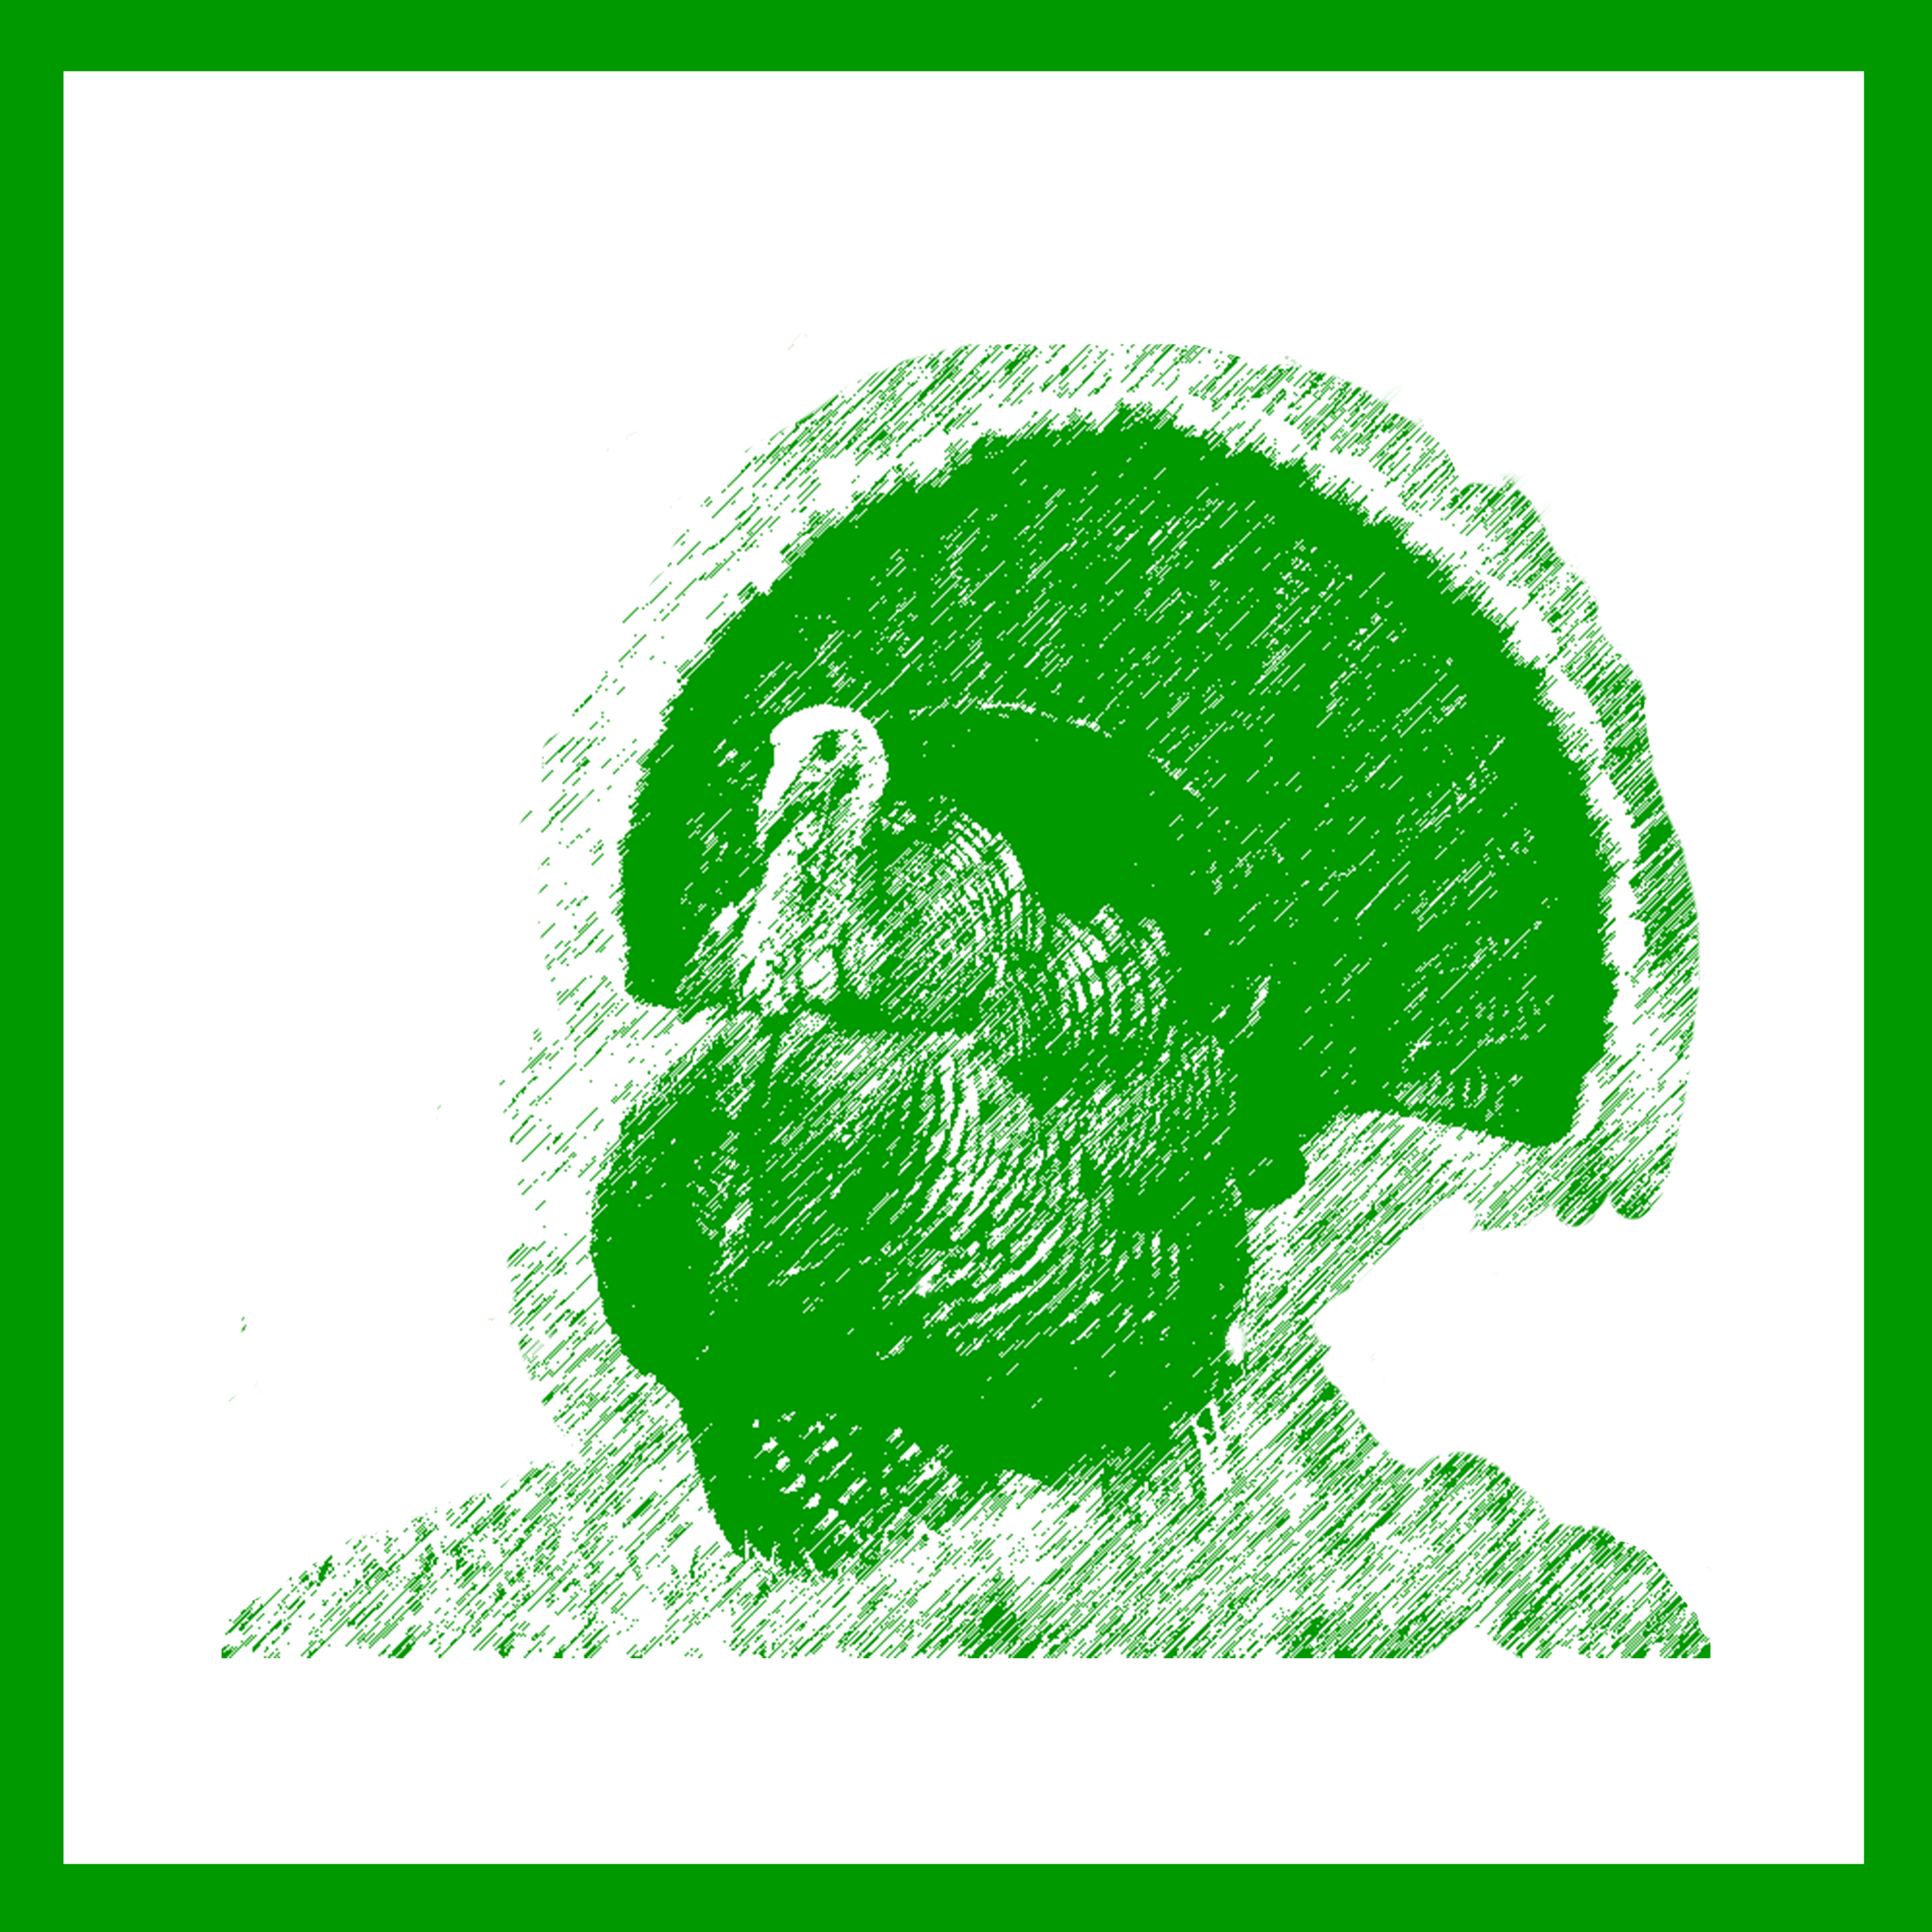 Wild turkey in edge habitat icon